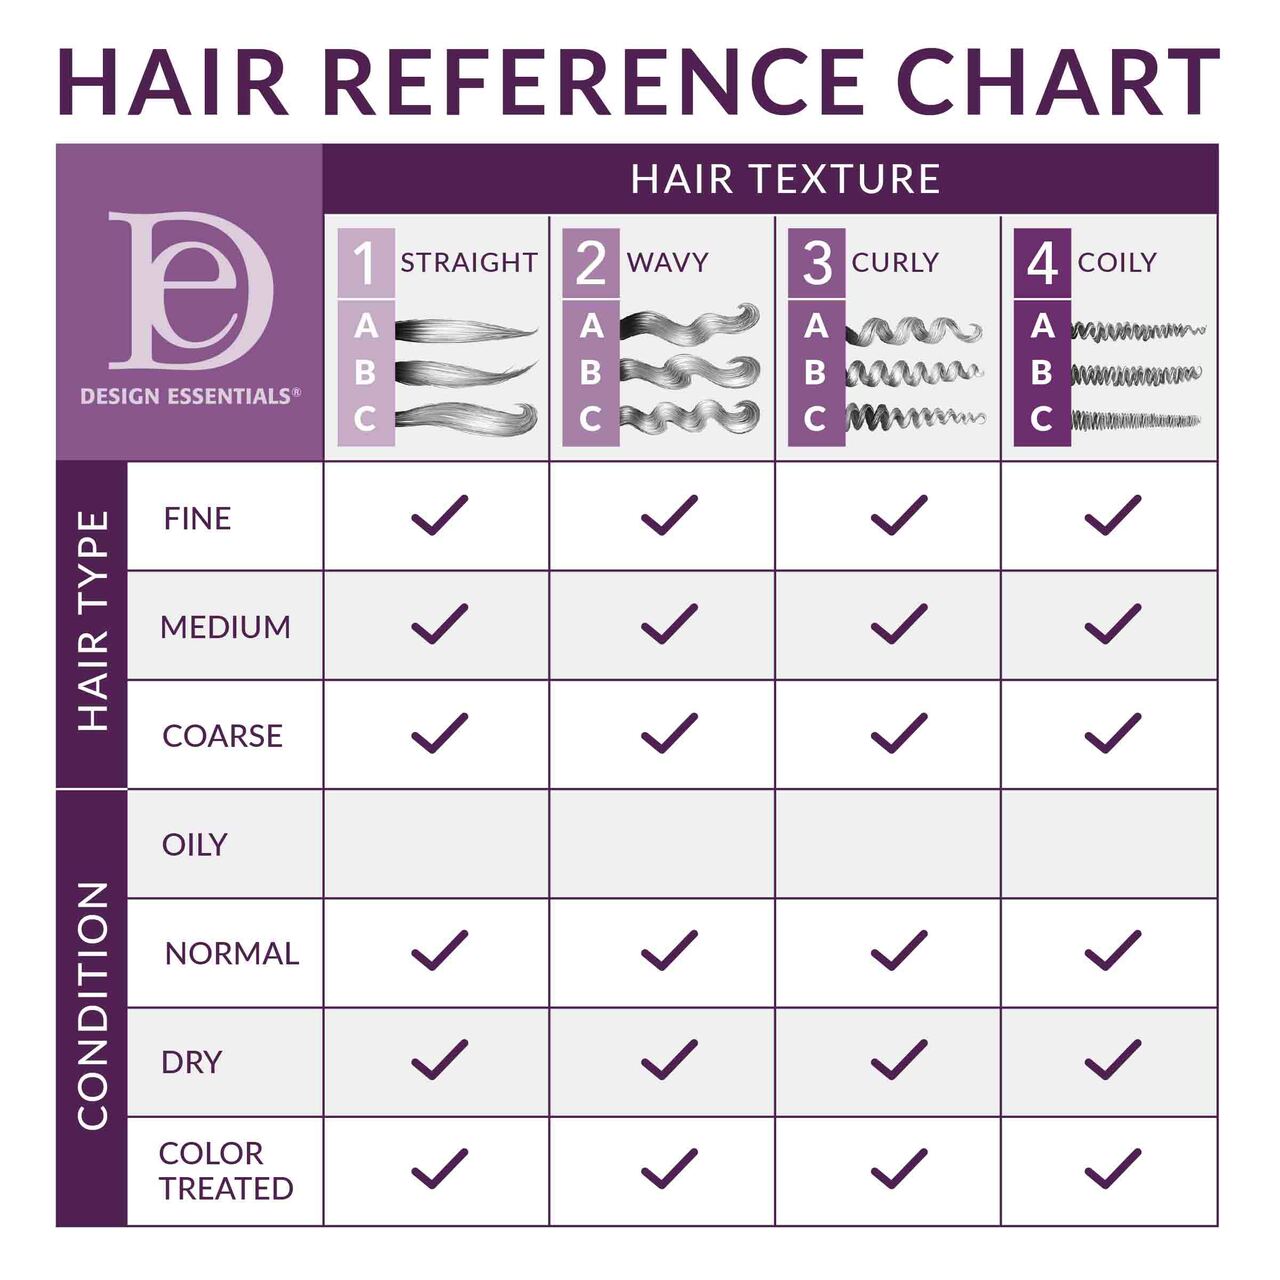 Nourishing_Co-Wash_-_Hair_Reference_Chart__89948.1578654238